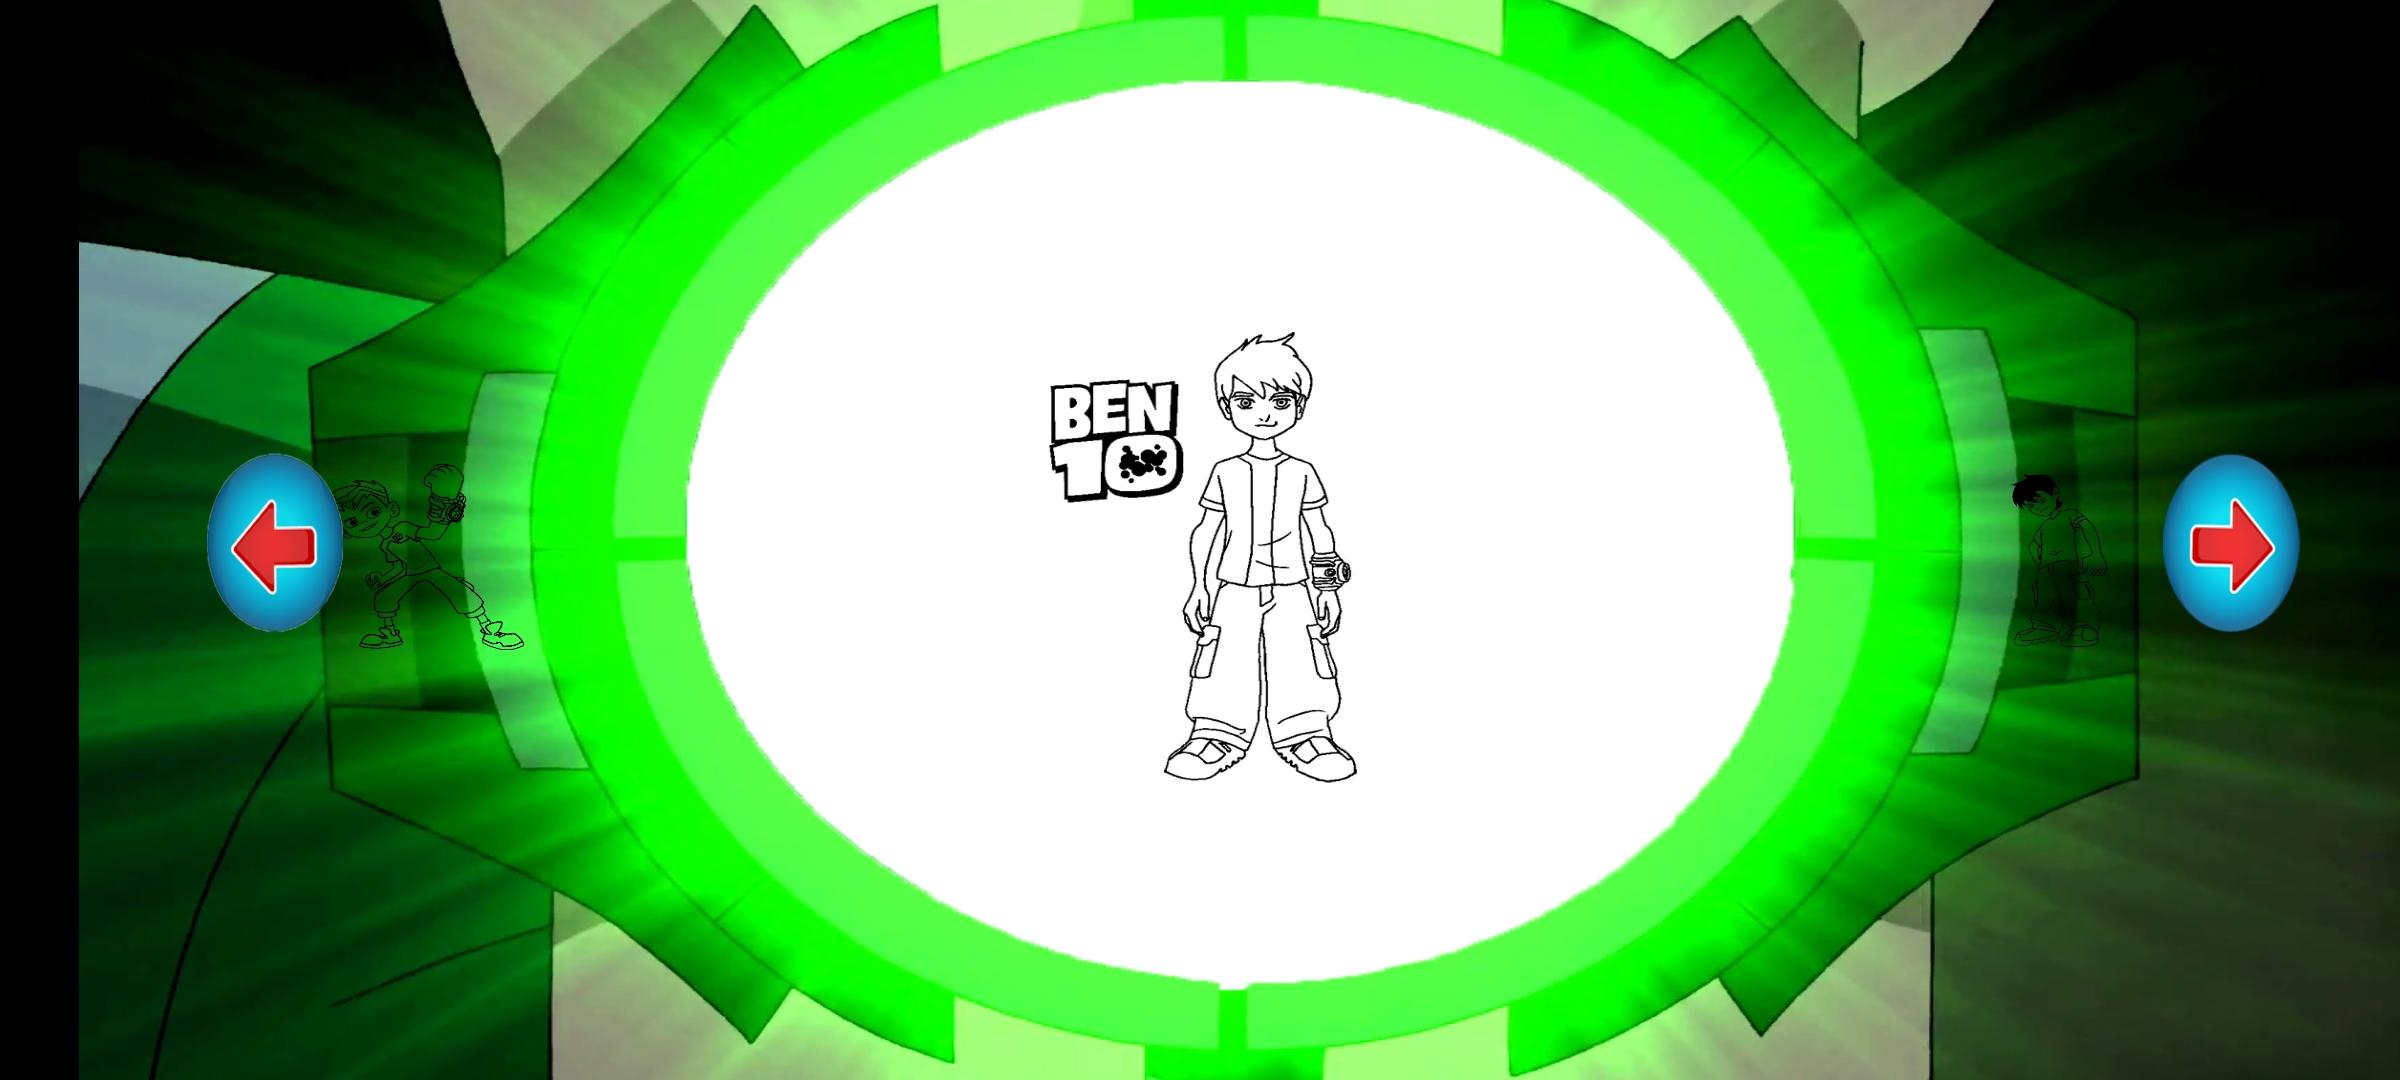 Ben  Coloring 10 heroes ultimate 1.0 Screenshot 8